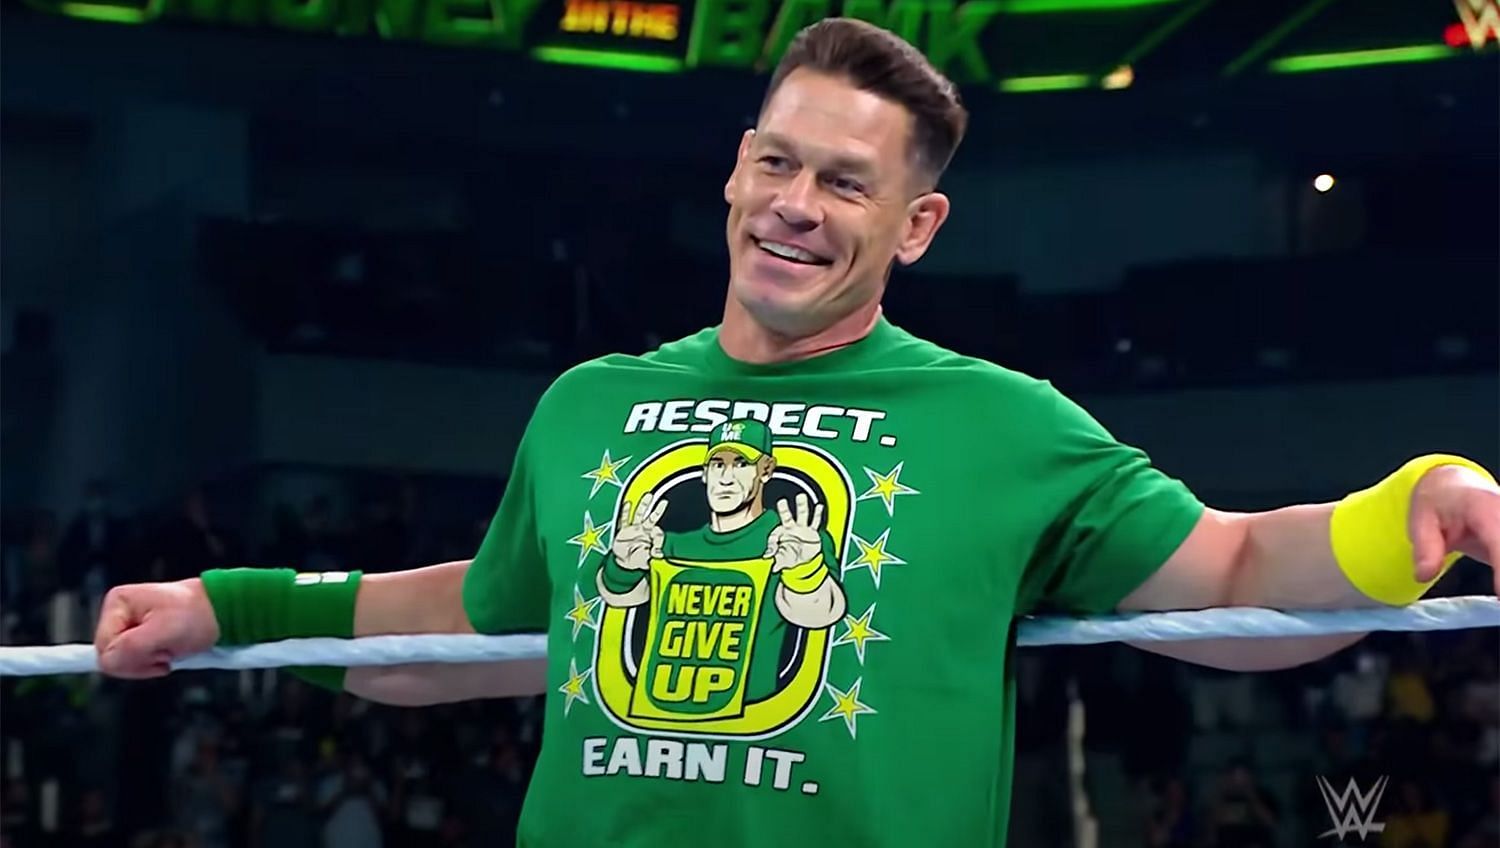 John Cena during his last run with WWE in 2021